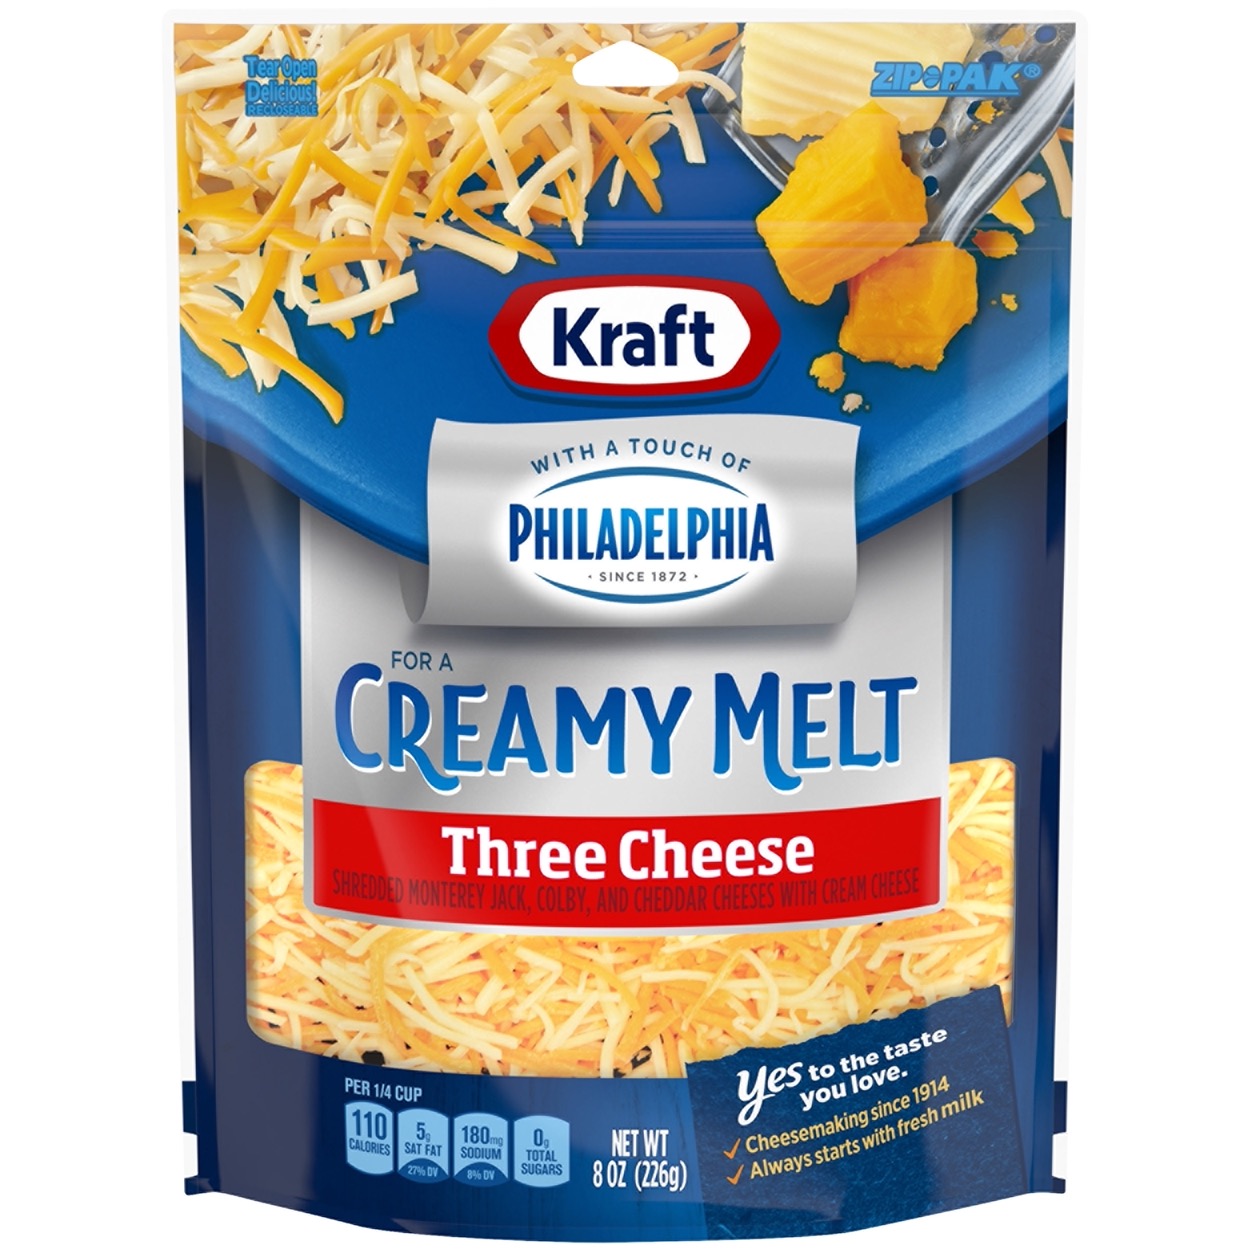 Three Cheese with Philadelphia Cream Cheese